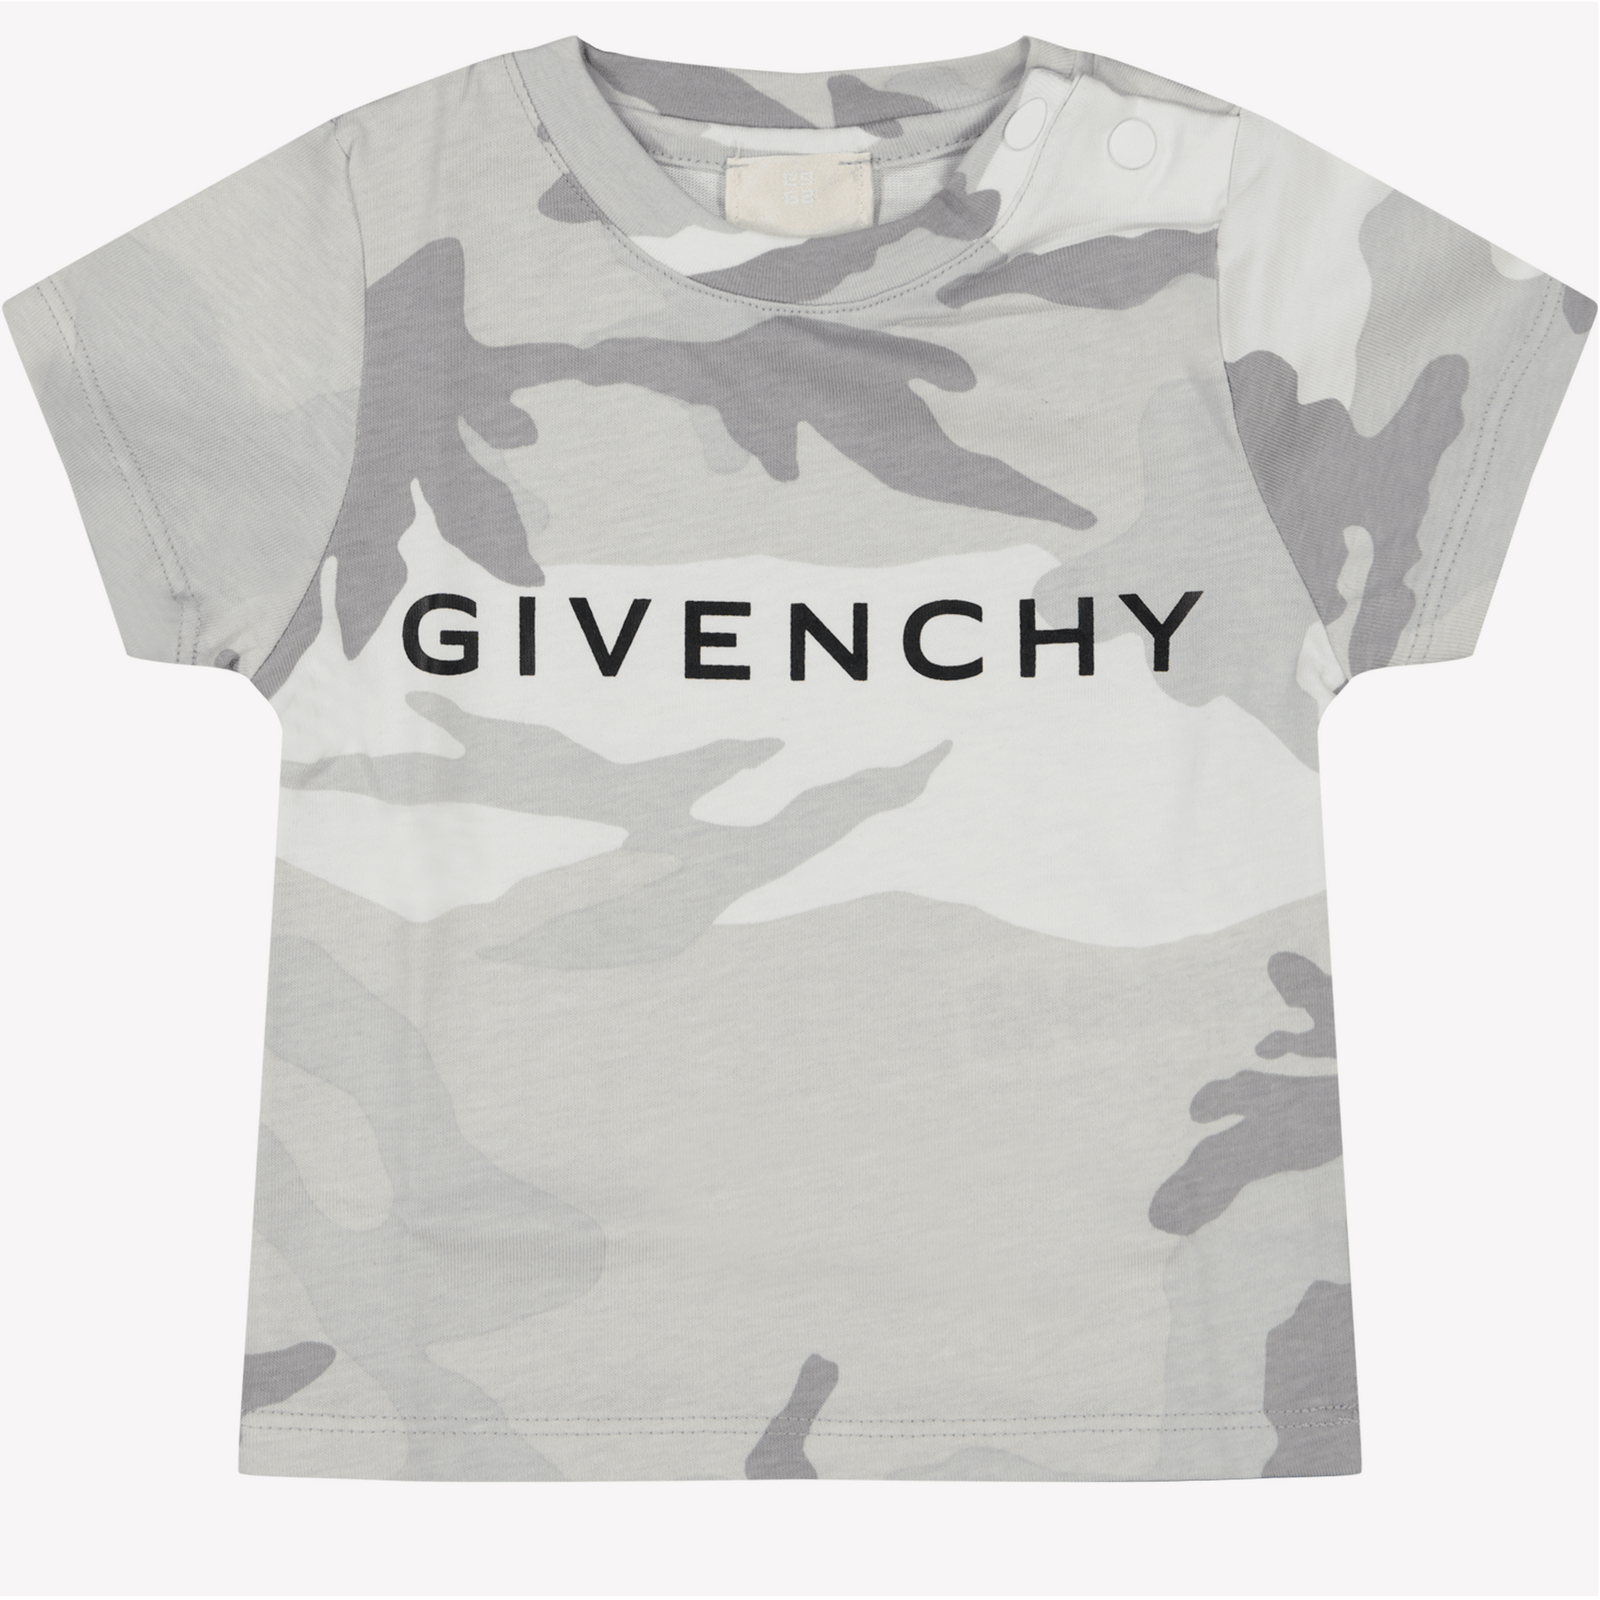 Givenchy Baby Jongens T-Shirt Grijs 6 mnd